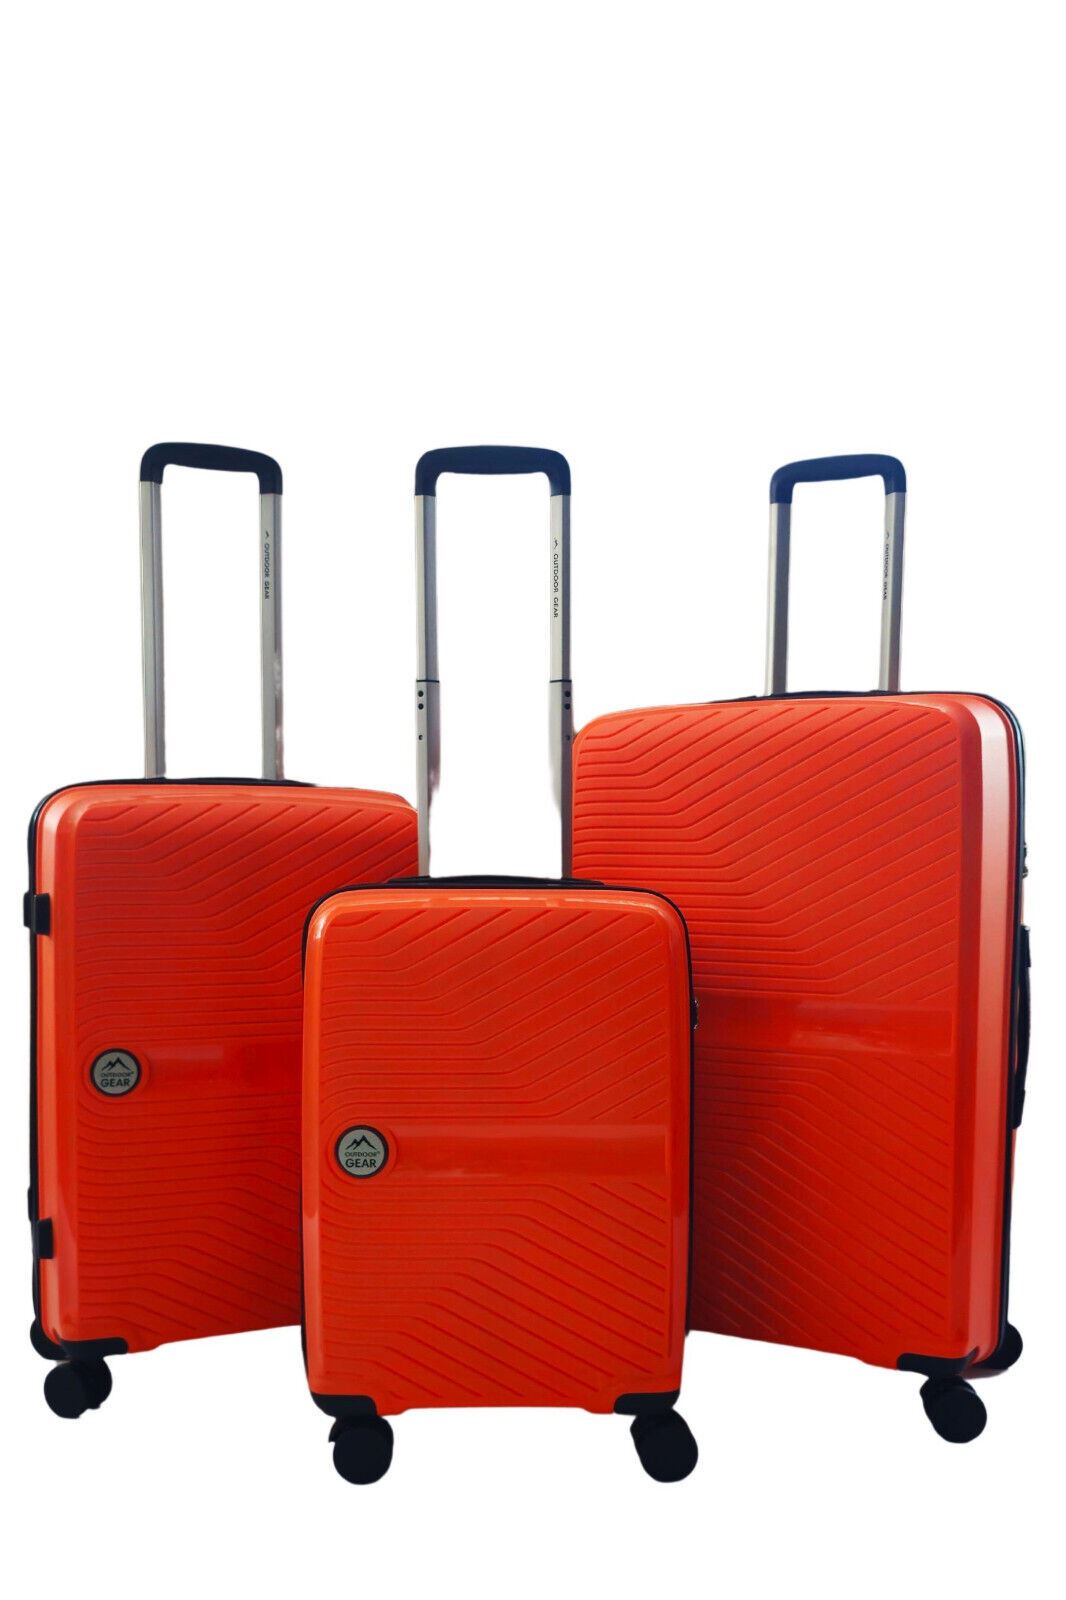 Abbeville Set of 3 Hard Shell Suitcase in Orange